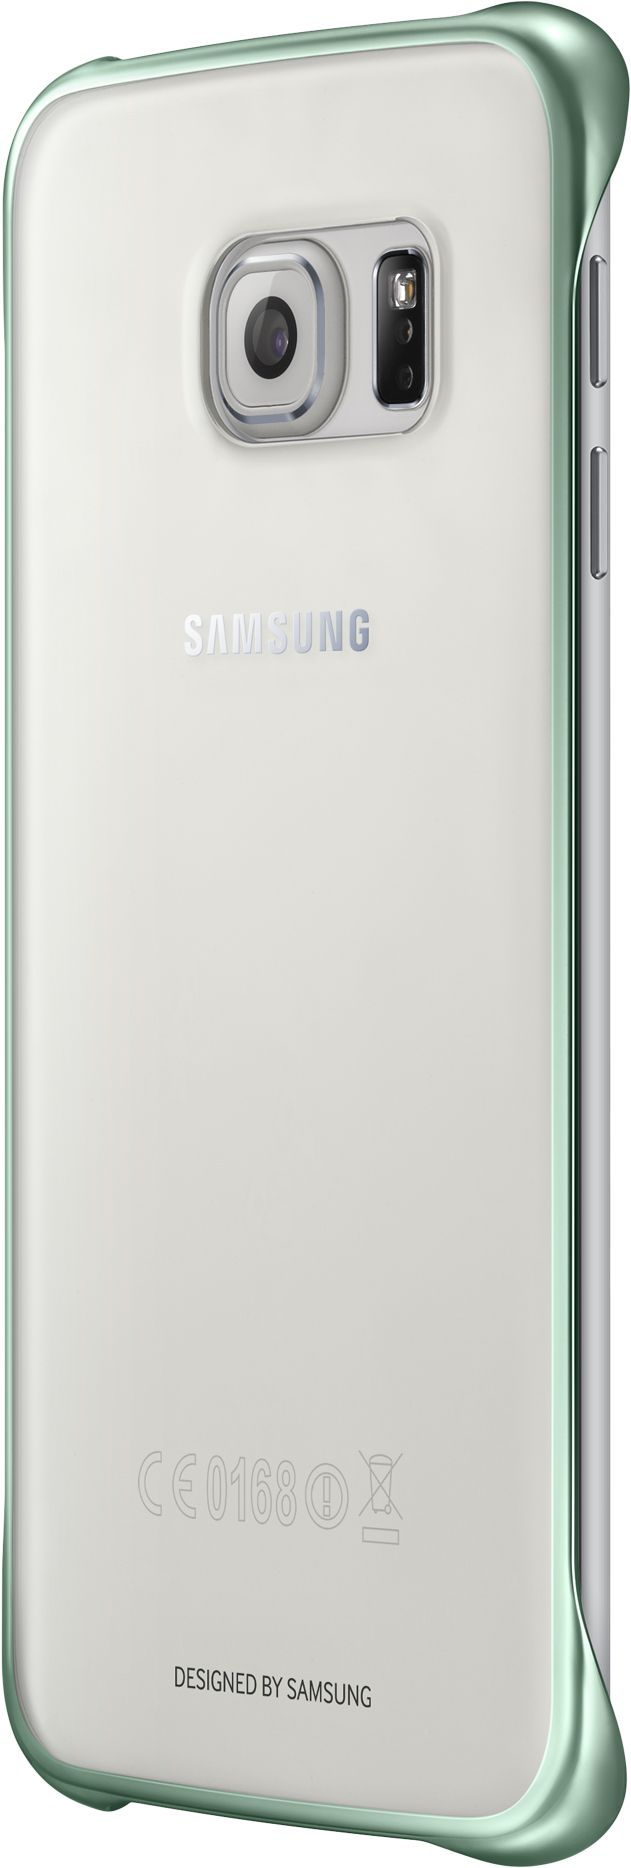 Samsung Накладка Protective Cover Clear для Samsung Galaxy S6 Edge SM-G925 (пластик)